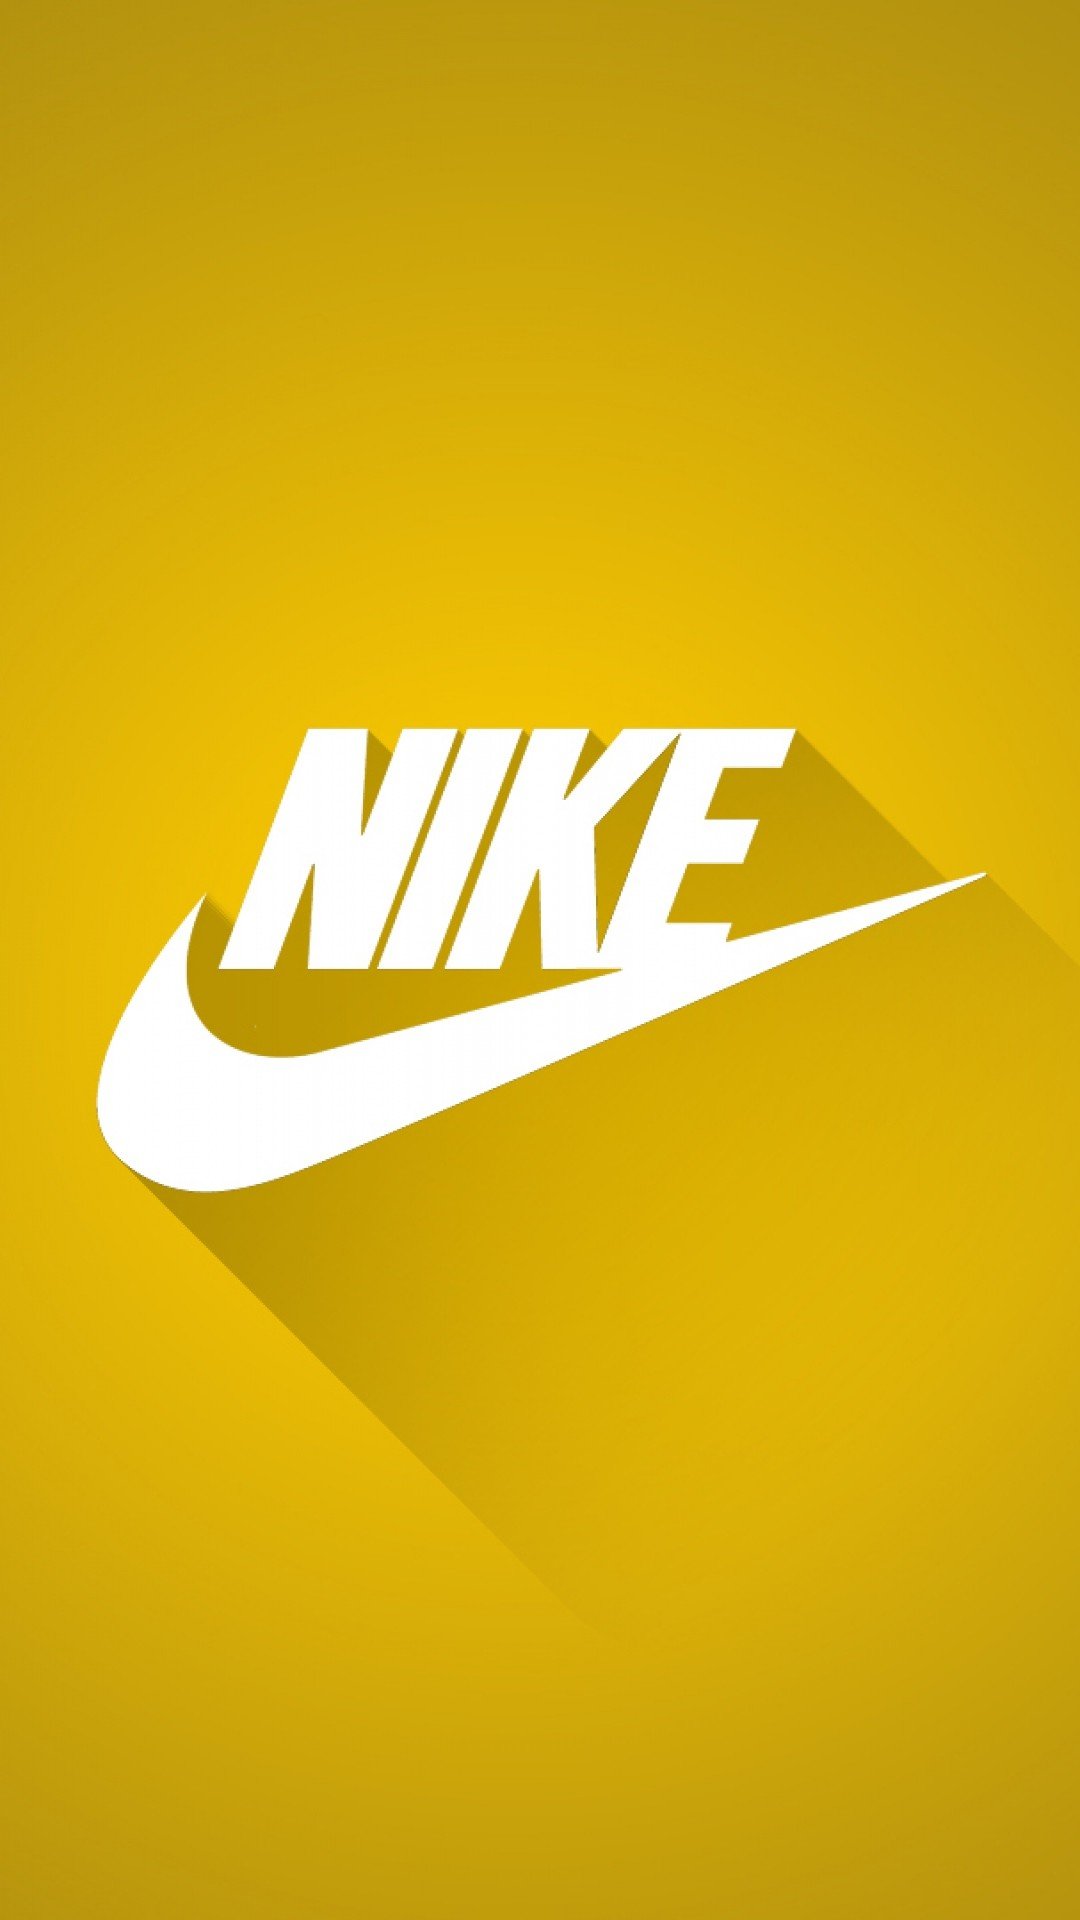 Nike iPhone Wallpaper HD